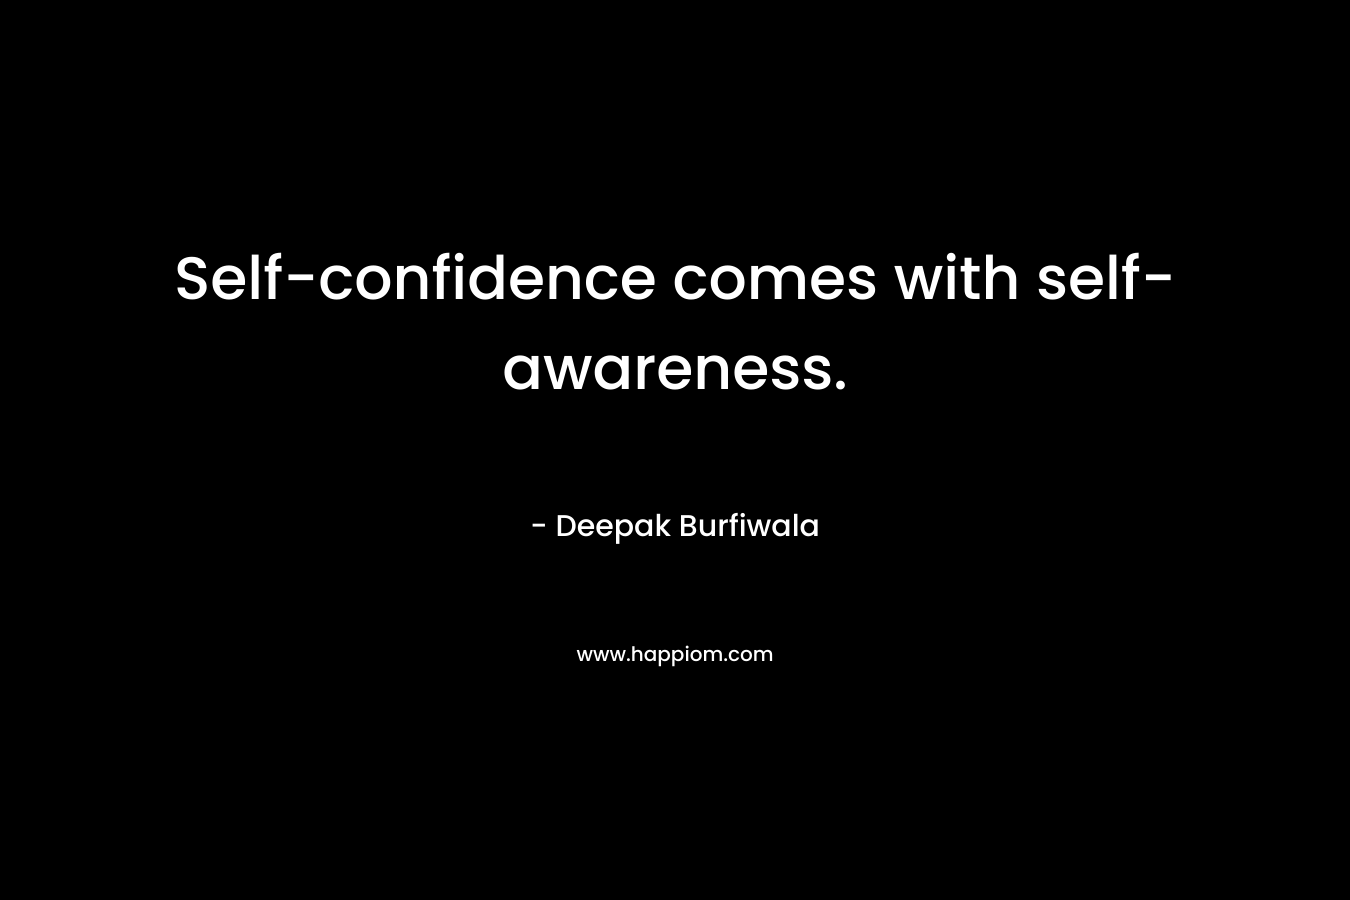 Self-confidence comes with self-awareness.